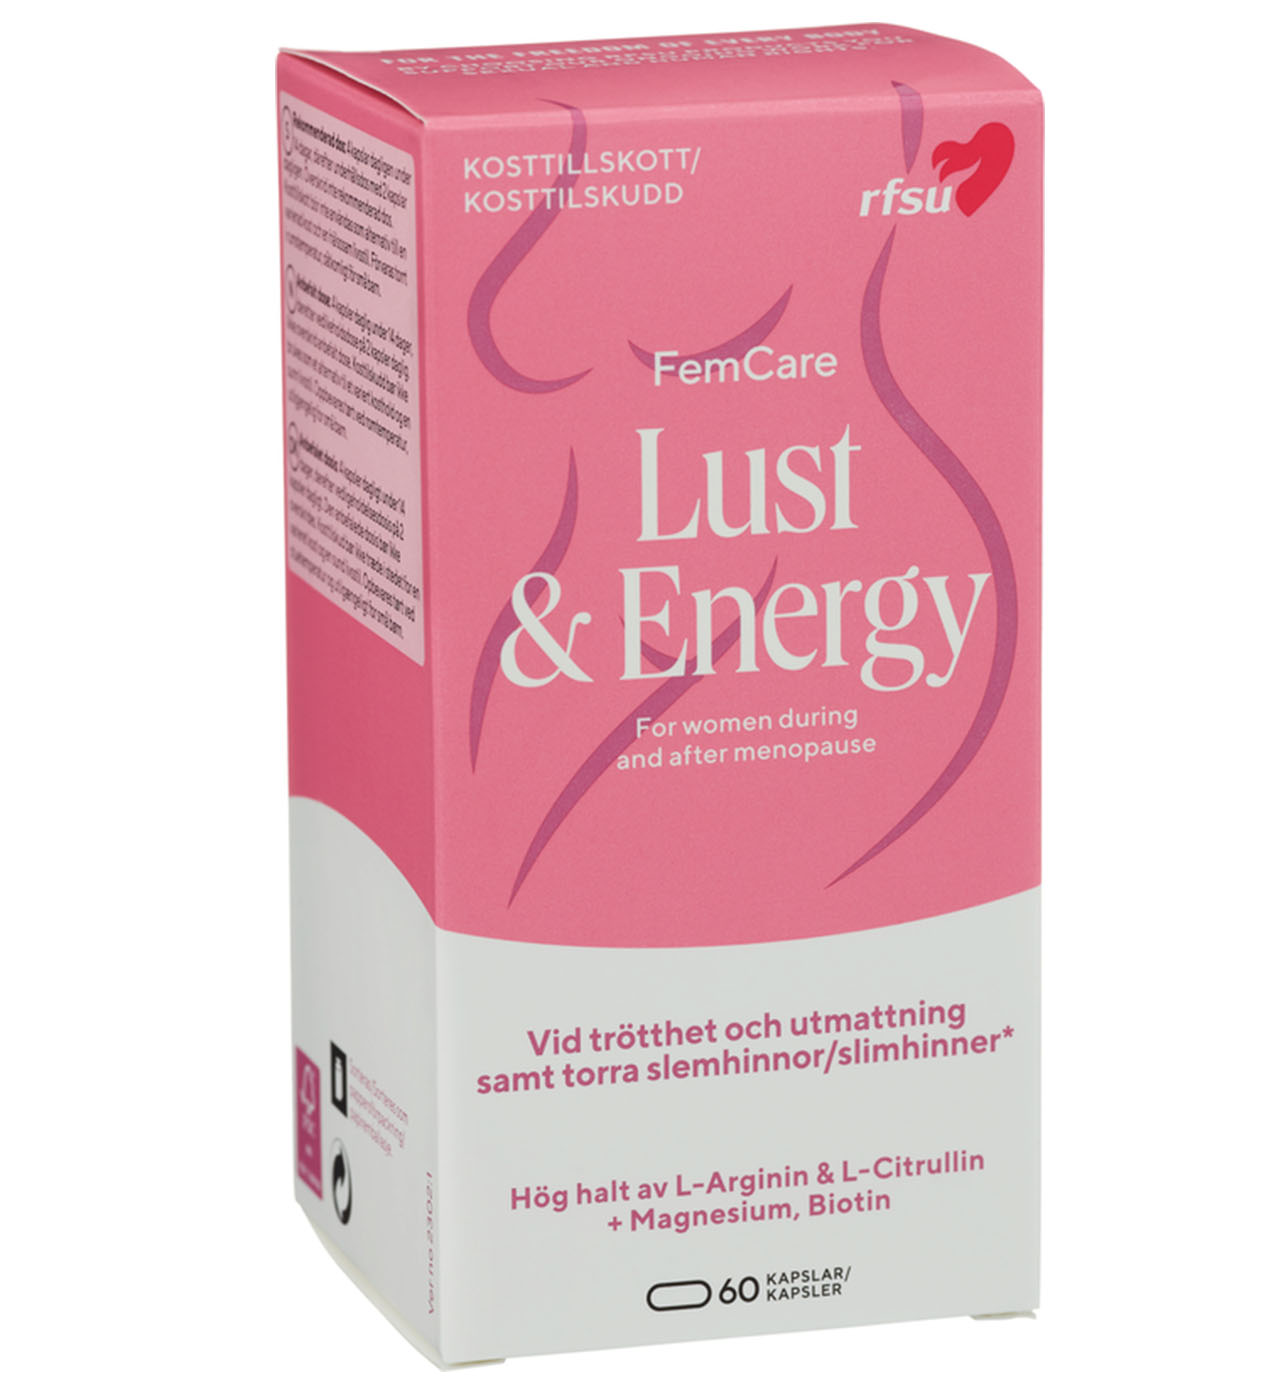 RFSU FemCare Lust & Energy - 60 capsules